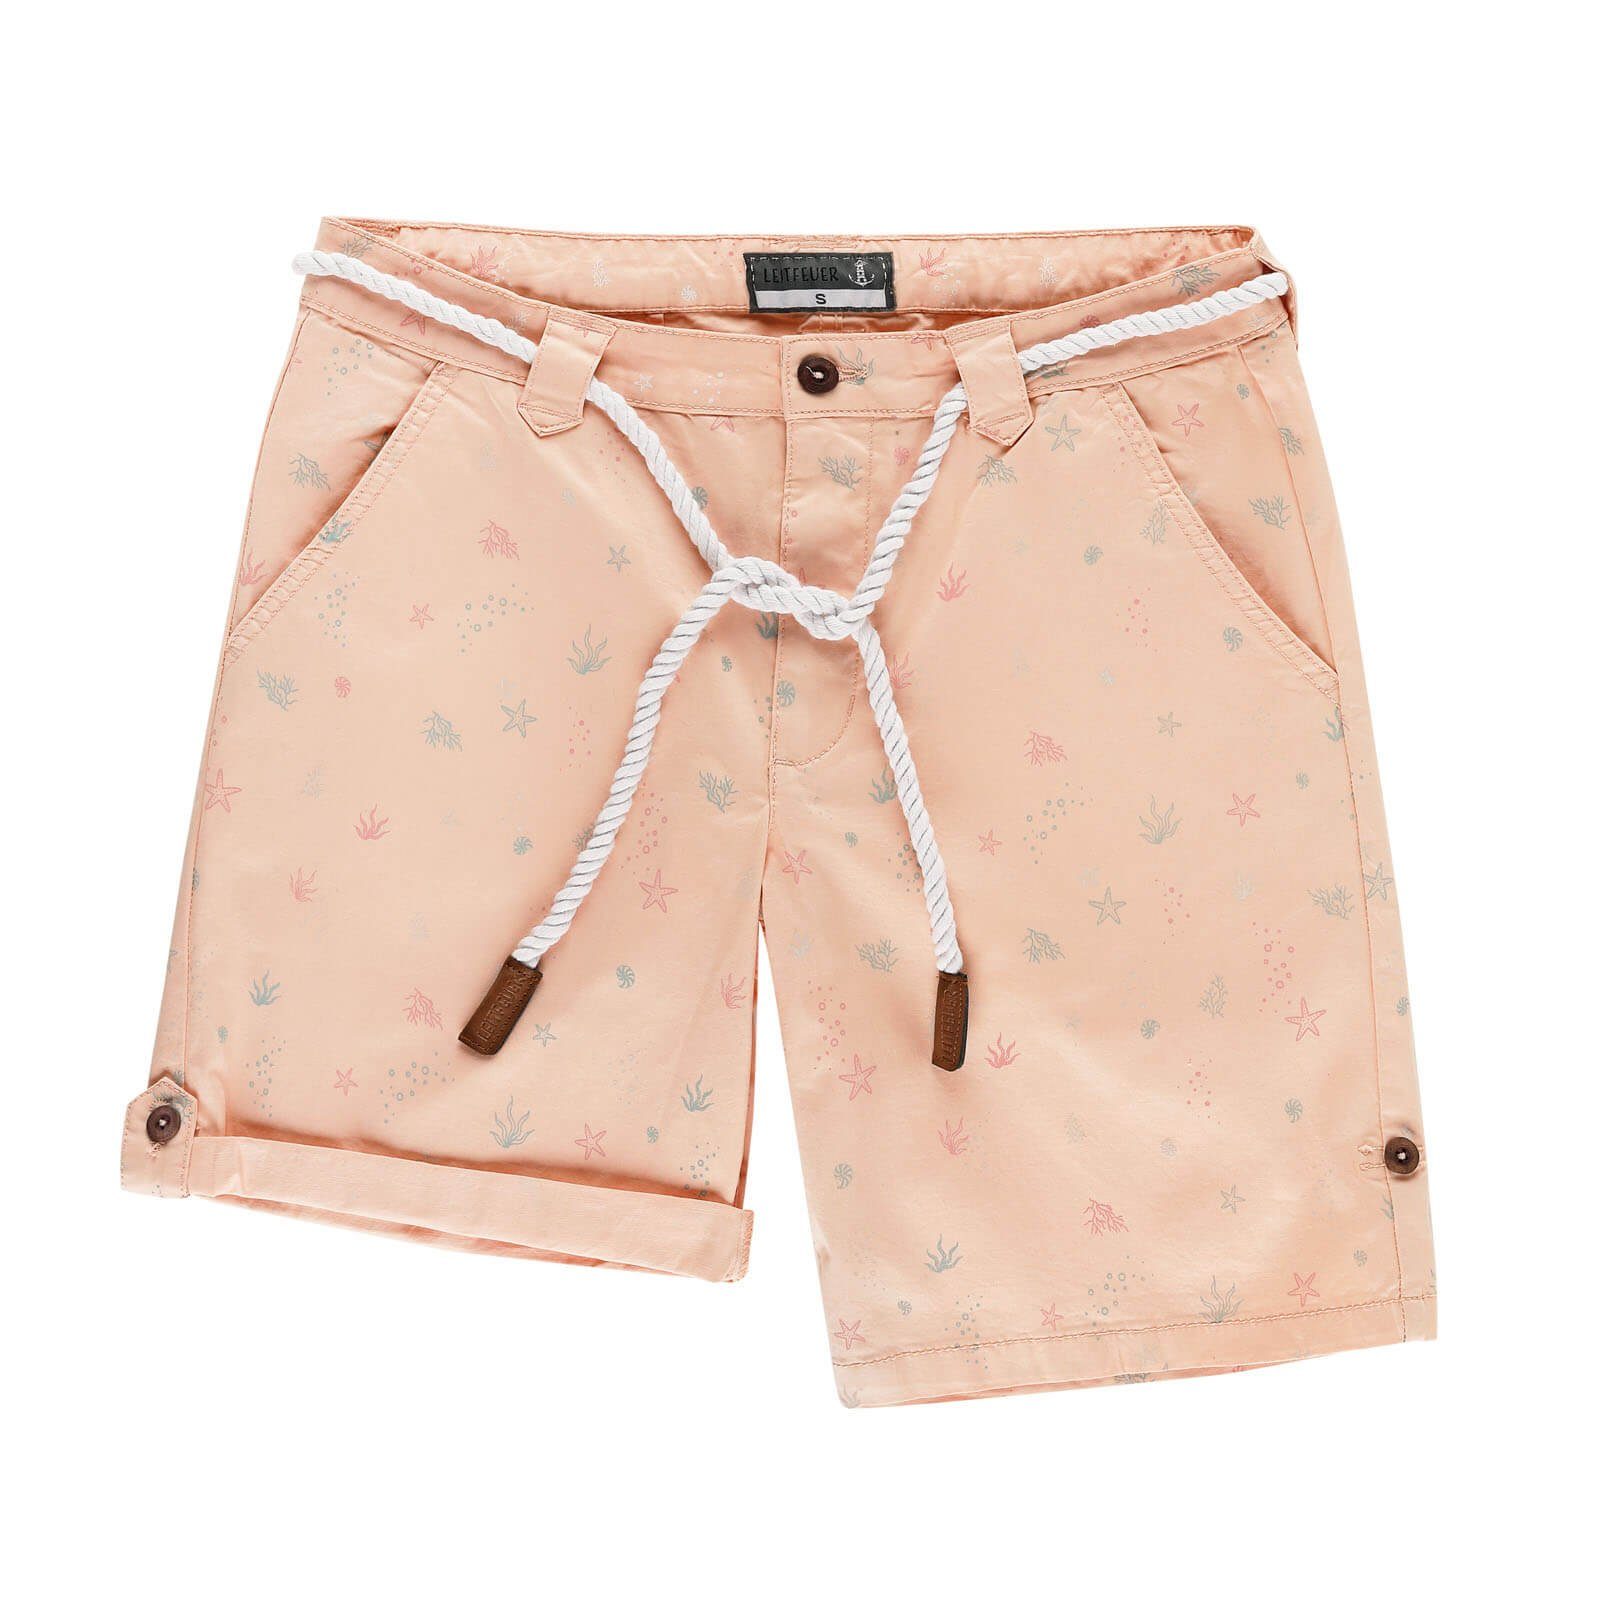 Leitfeuer Bermudas Damen Shorts mit maritimen Print - Kurze Hose mit geflochtenem Gürtel apricot